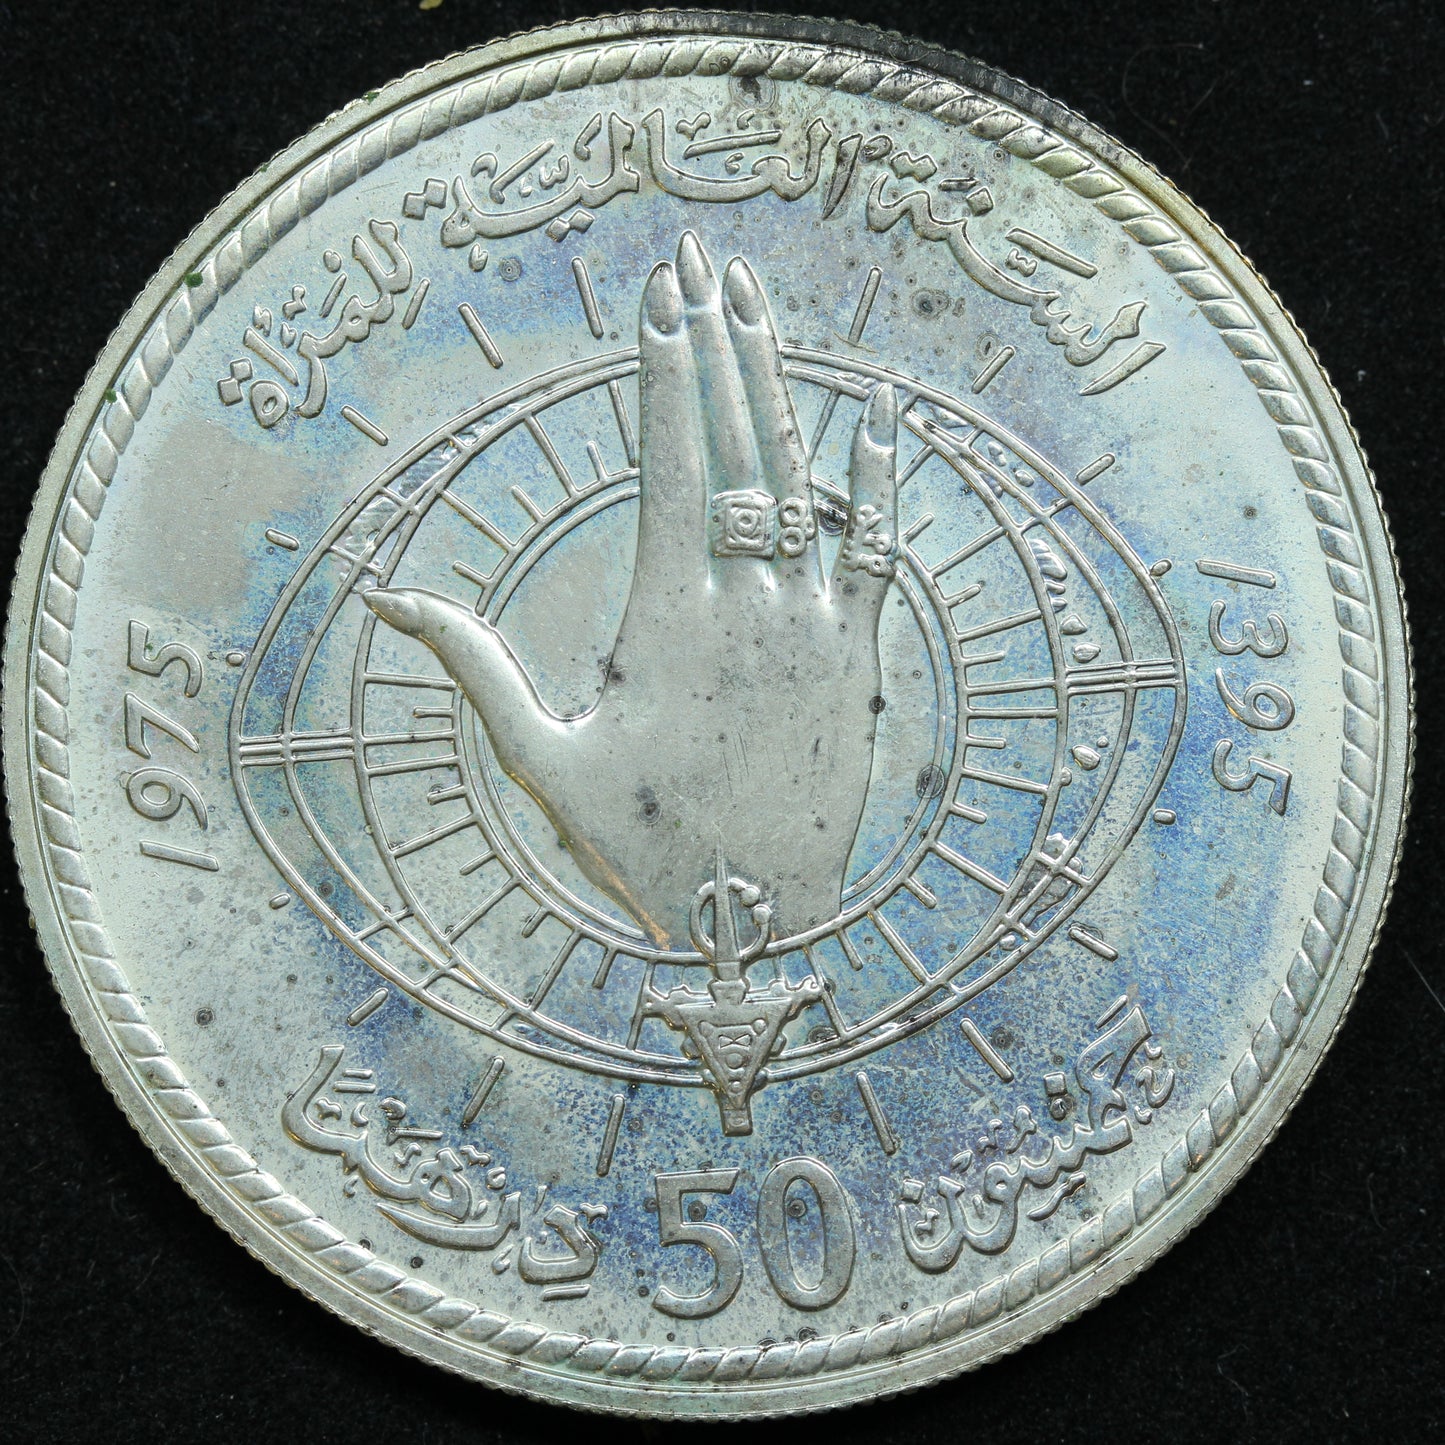 1975 Morocco 50 Dirhams Proof Silver Coin  - Y# 67 - Spotting/Cloudy